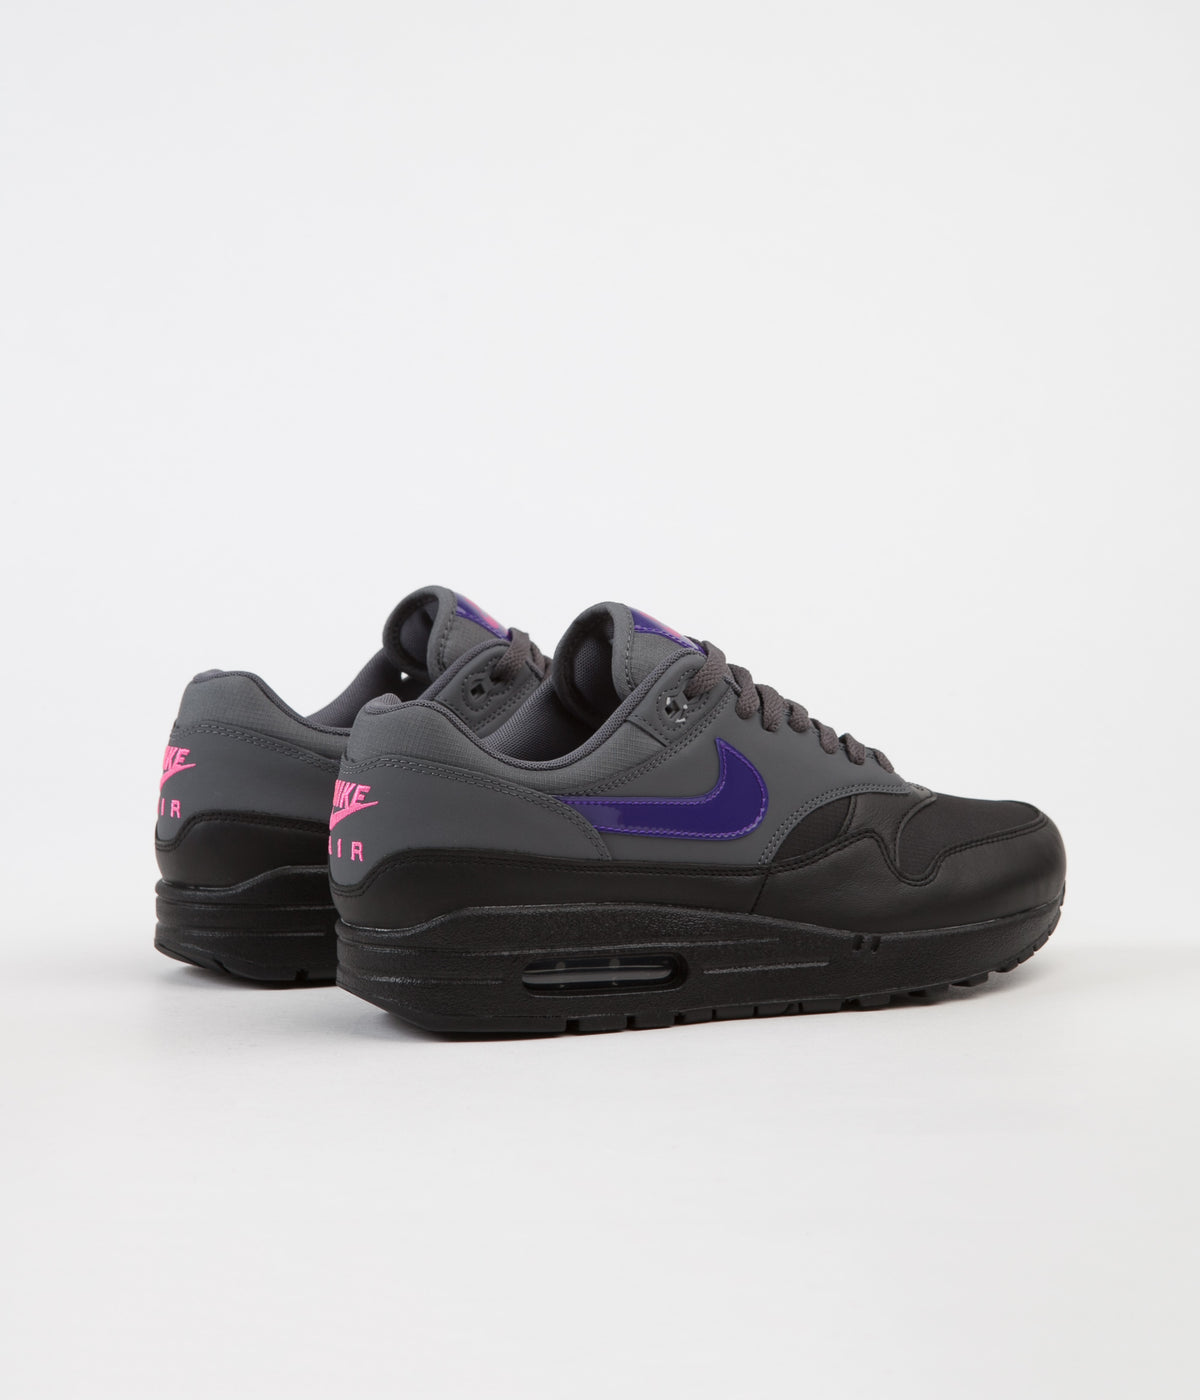 Suburbio Goneryl Margaret Mitchell Nike Air Max 1 Shoes - Dark Grey / Fierce Purple - Black - Pink Blast |  Always in Colour